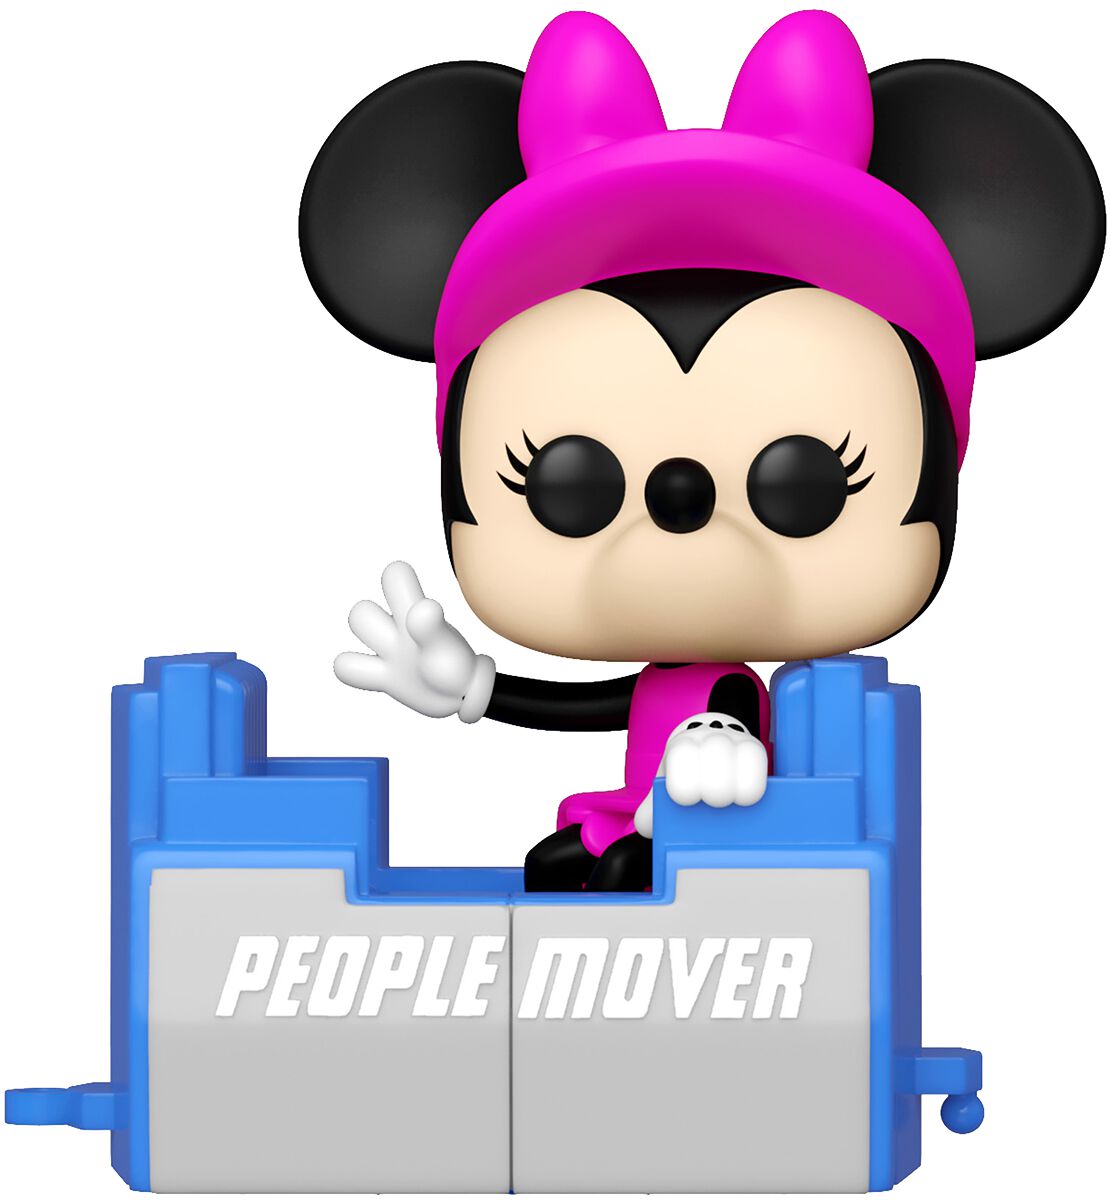 DISNEY 1166 Funko Pop! - Walt Disney World 50th - People Mover Minnie